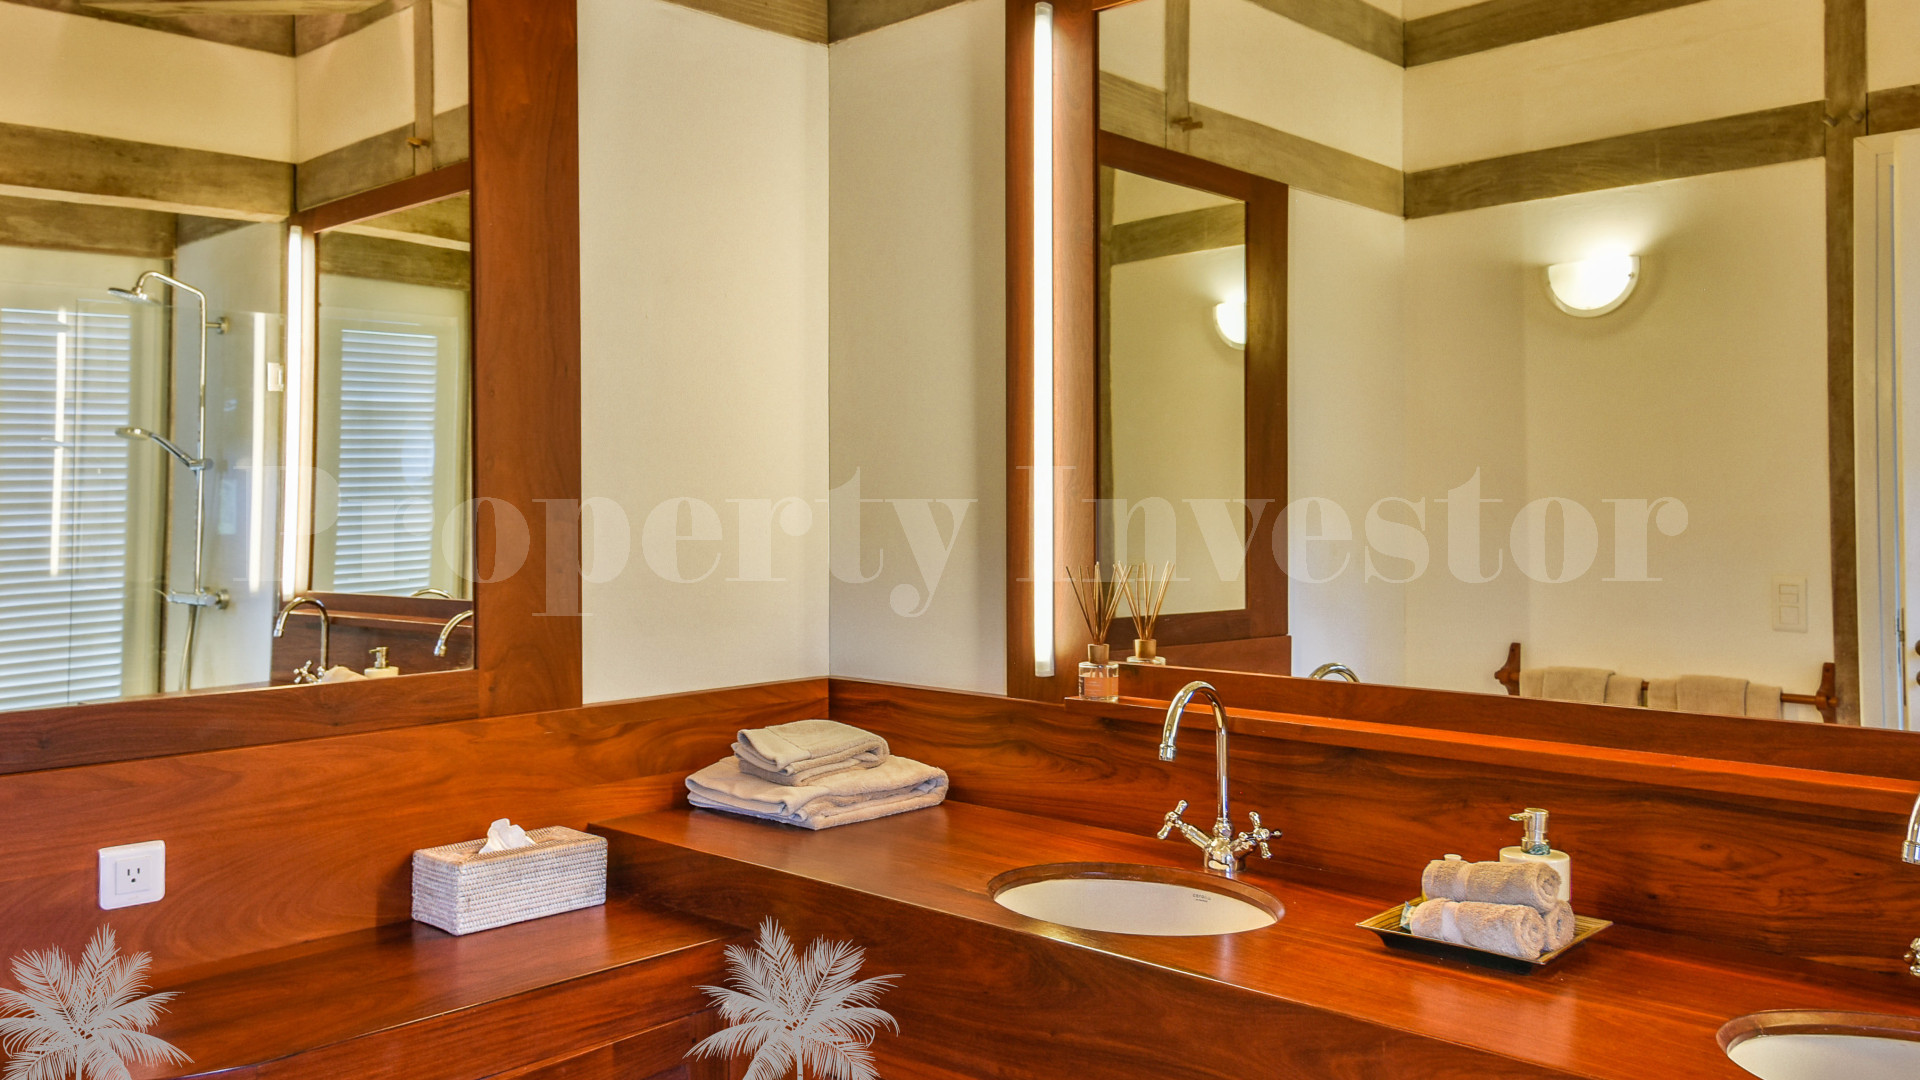 Breathtaking 5 Bedroom Tropical Luxury Designer Estate for Sale in Pedasi, Panama